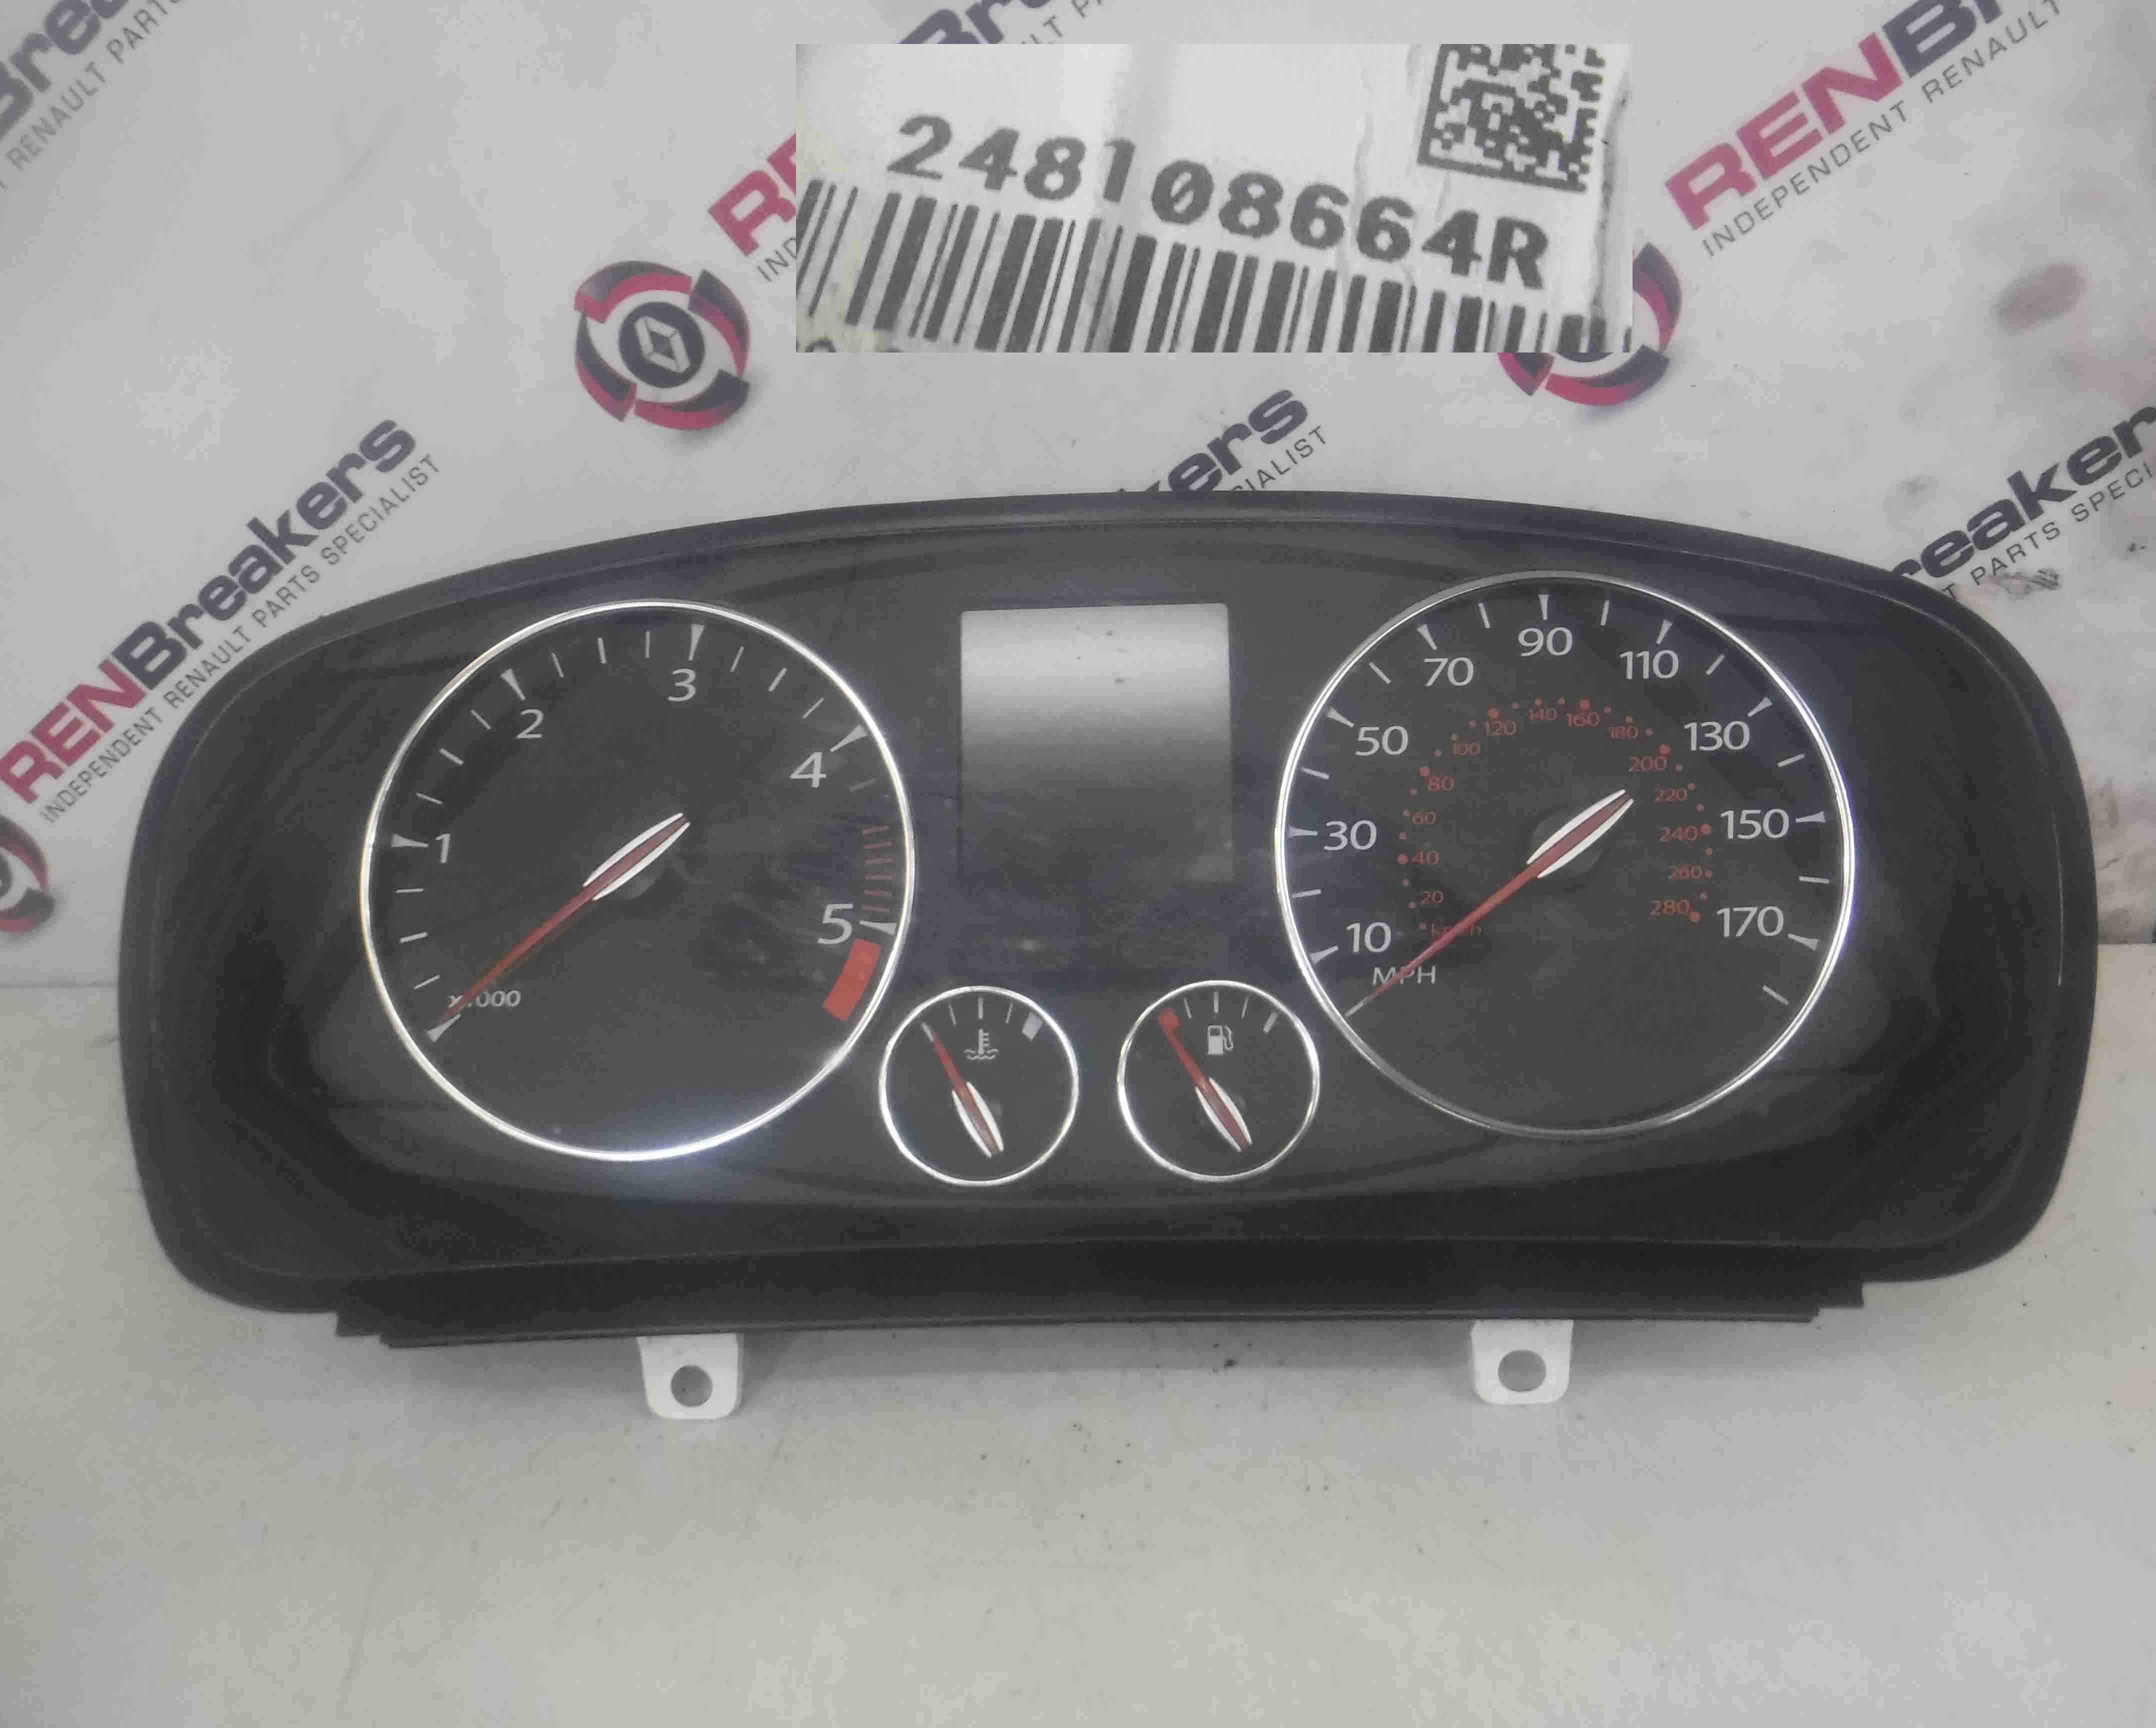 Renault Laguna MK3 2007-2012 Instrument Panel Dials Gauges Clocks 248108664R